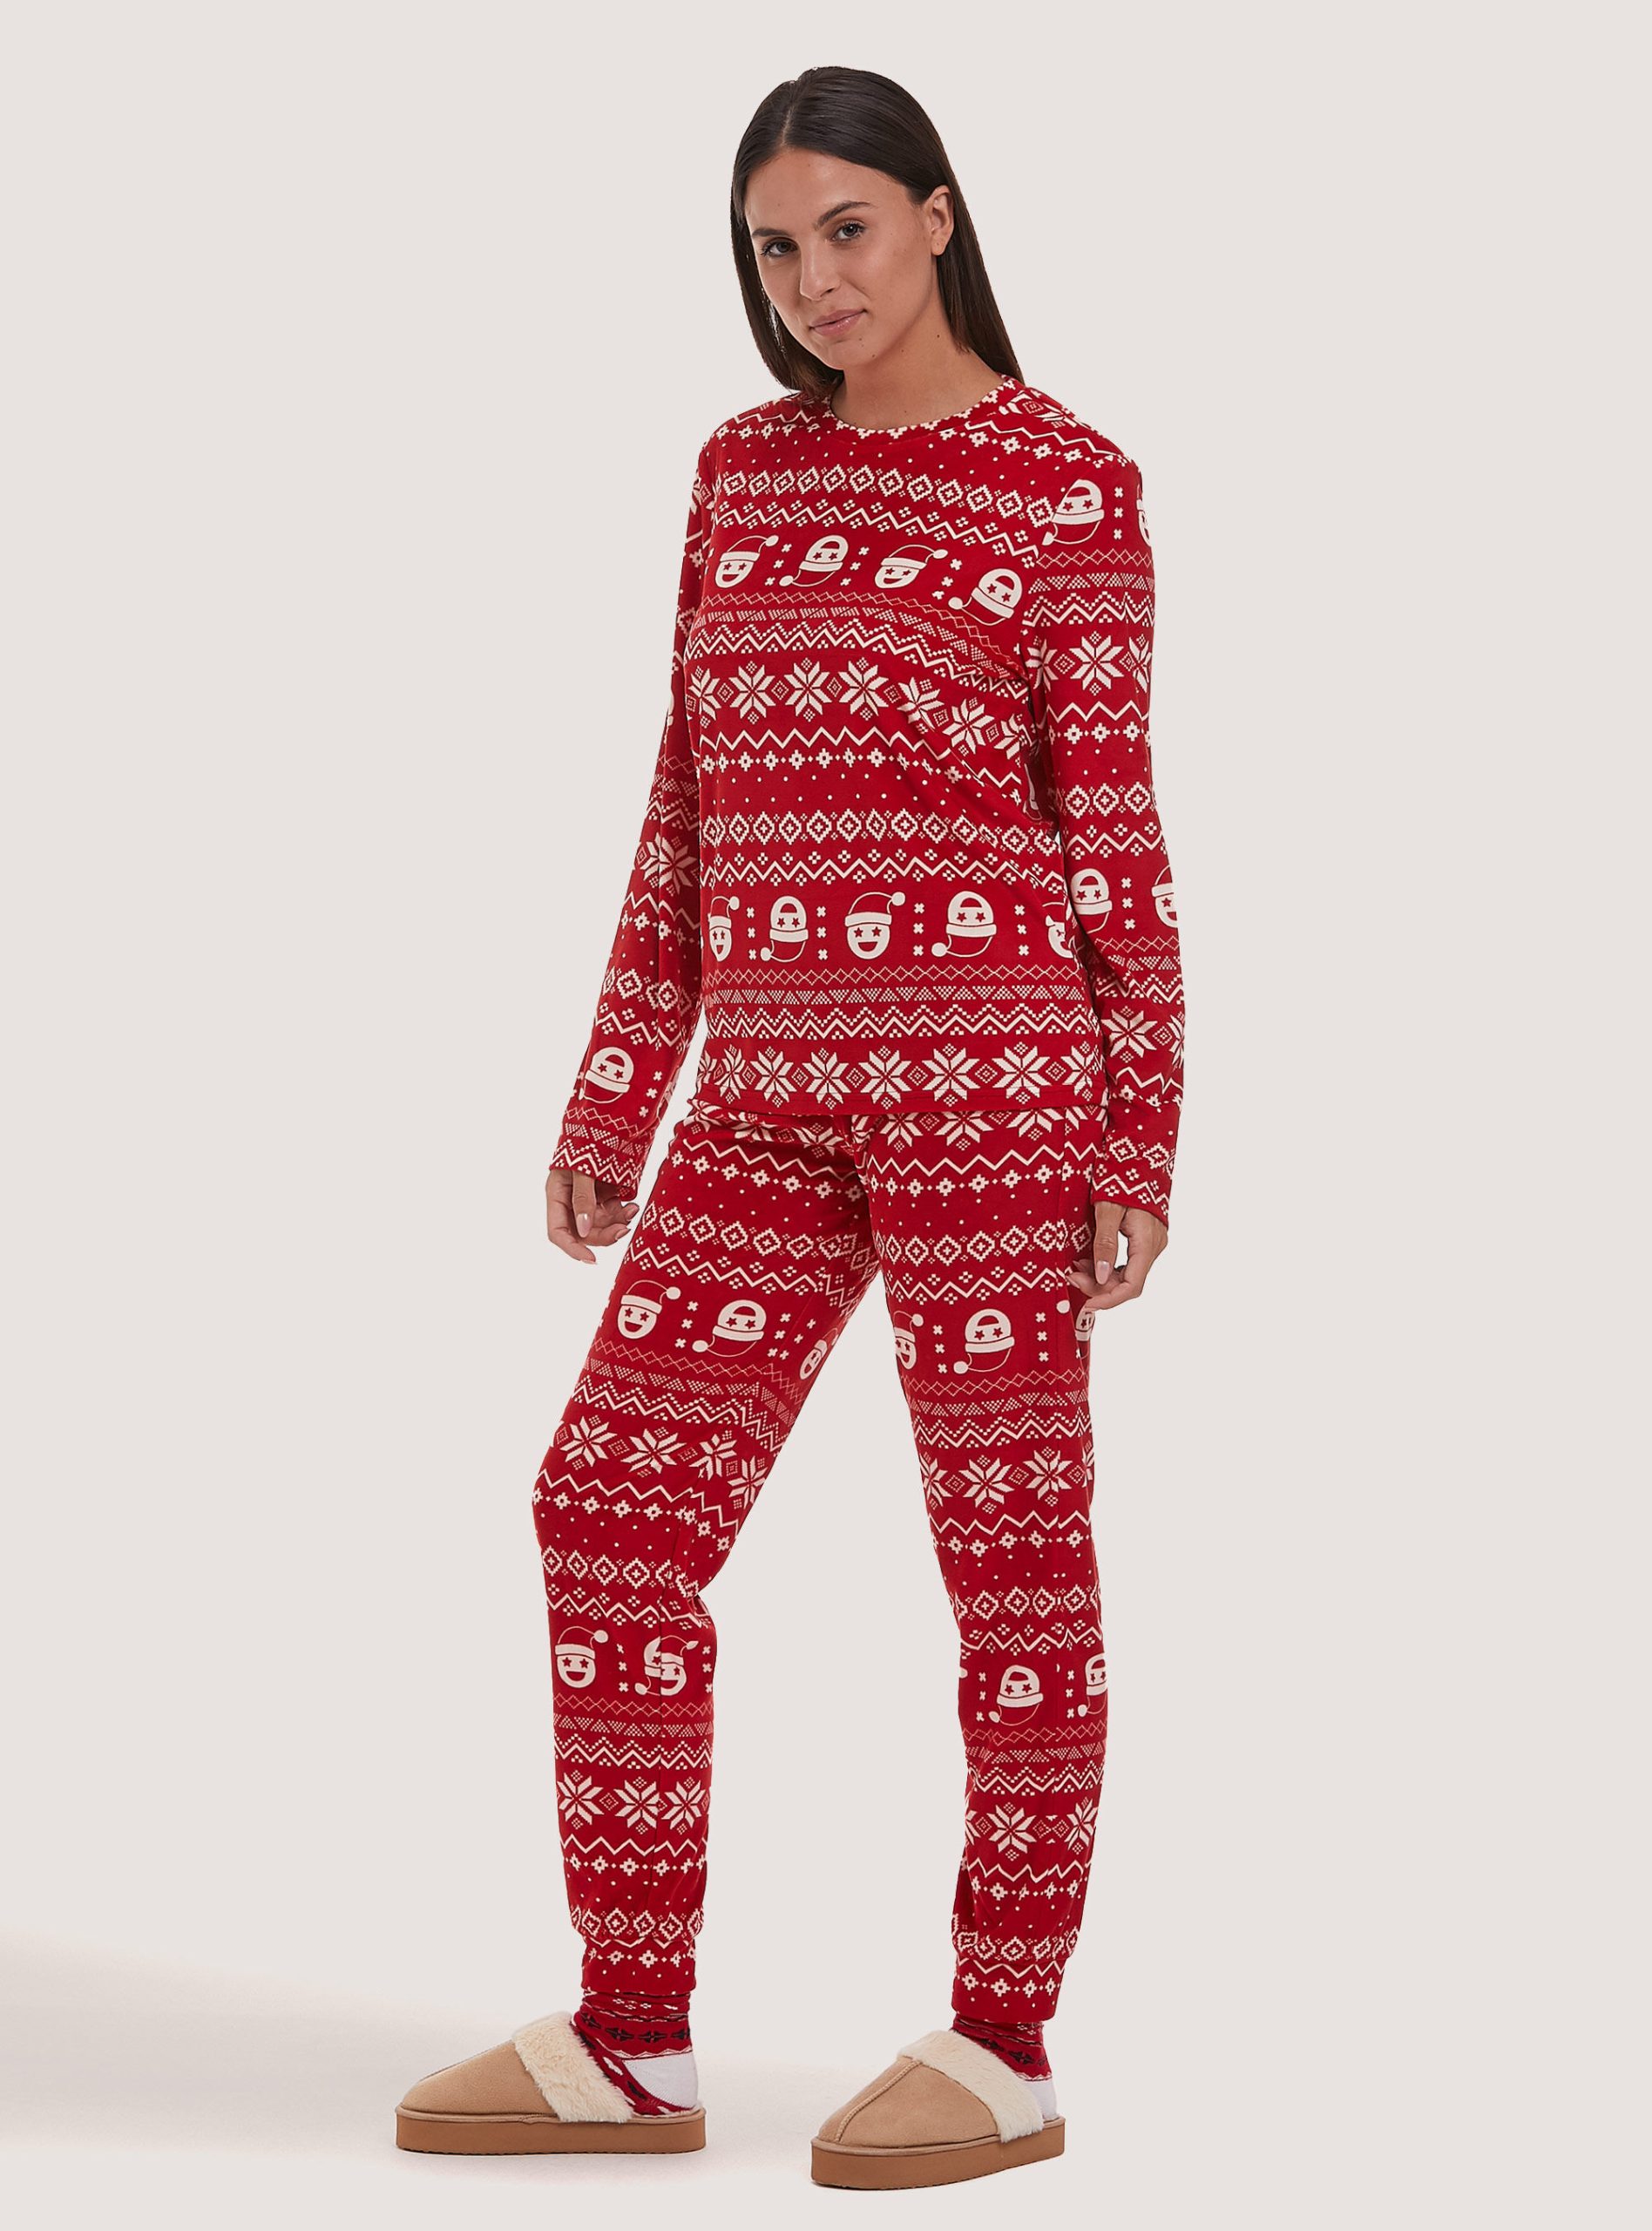 Frauen Pijamas Christmas Family Collection All Over Pyjamas Rd2 Red Medium Konsumgut Alcott – 2